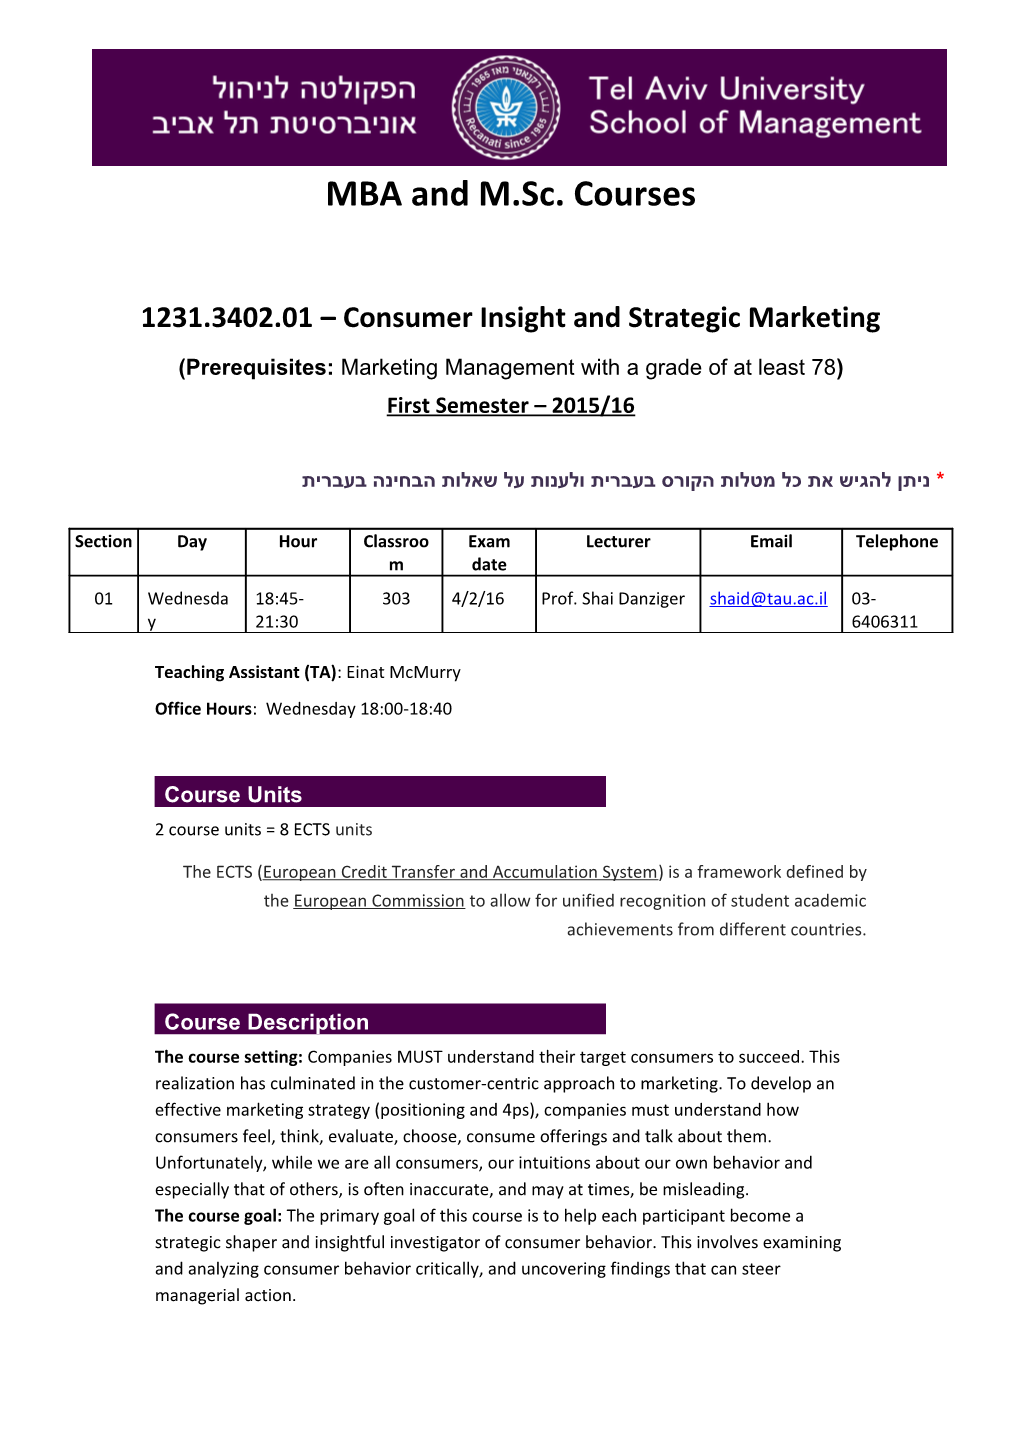 1231.3402.01 Consumer Insight and Strategic Marketing